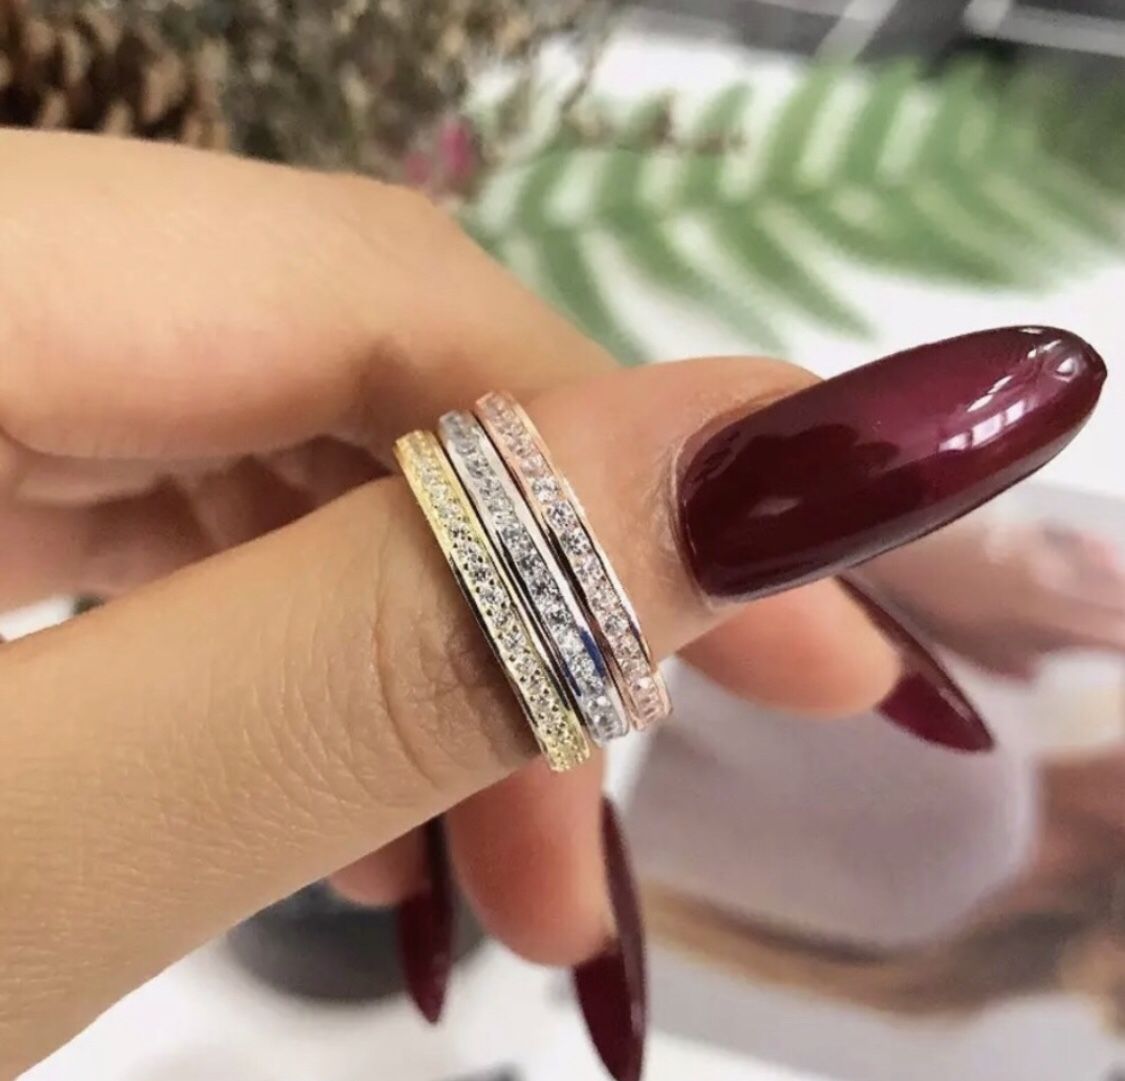 New 18 k gold wedding ring set engagement ring